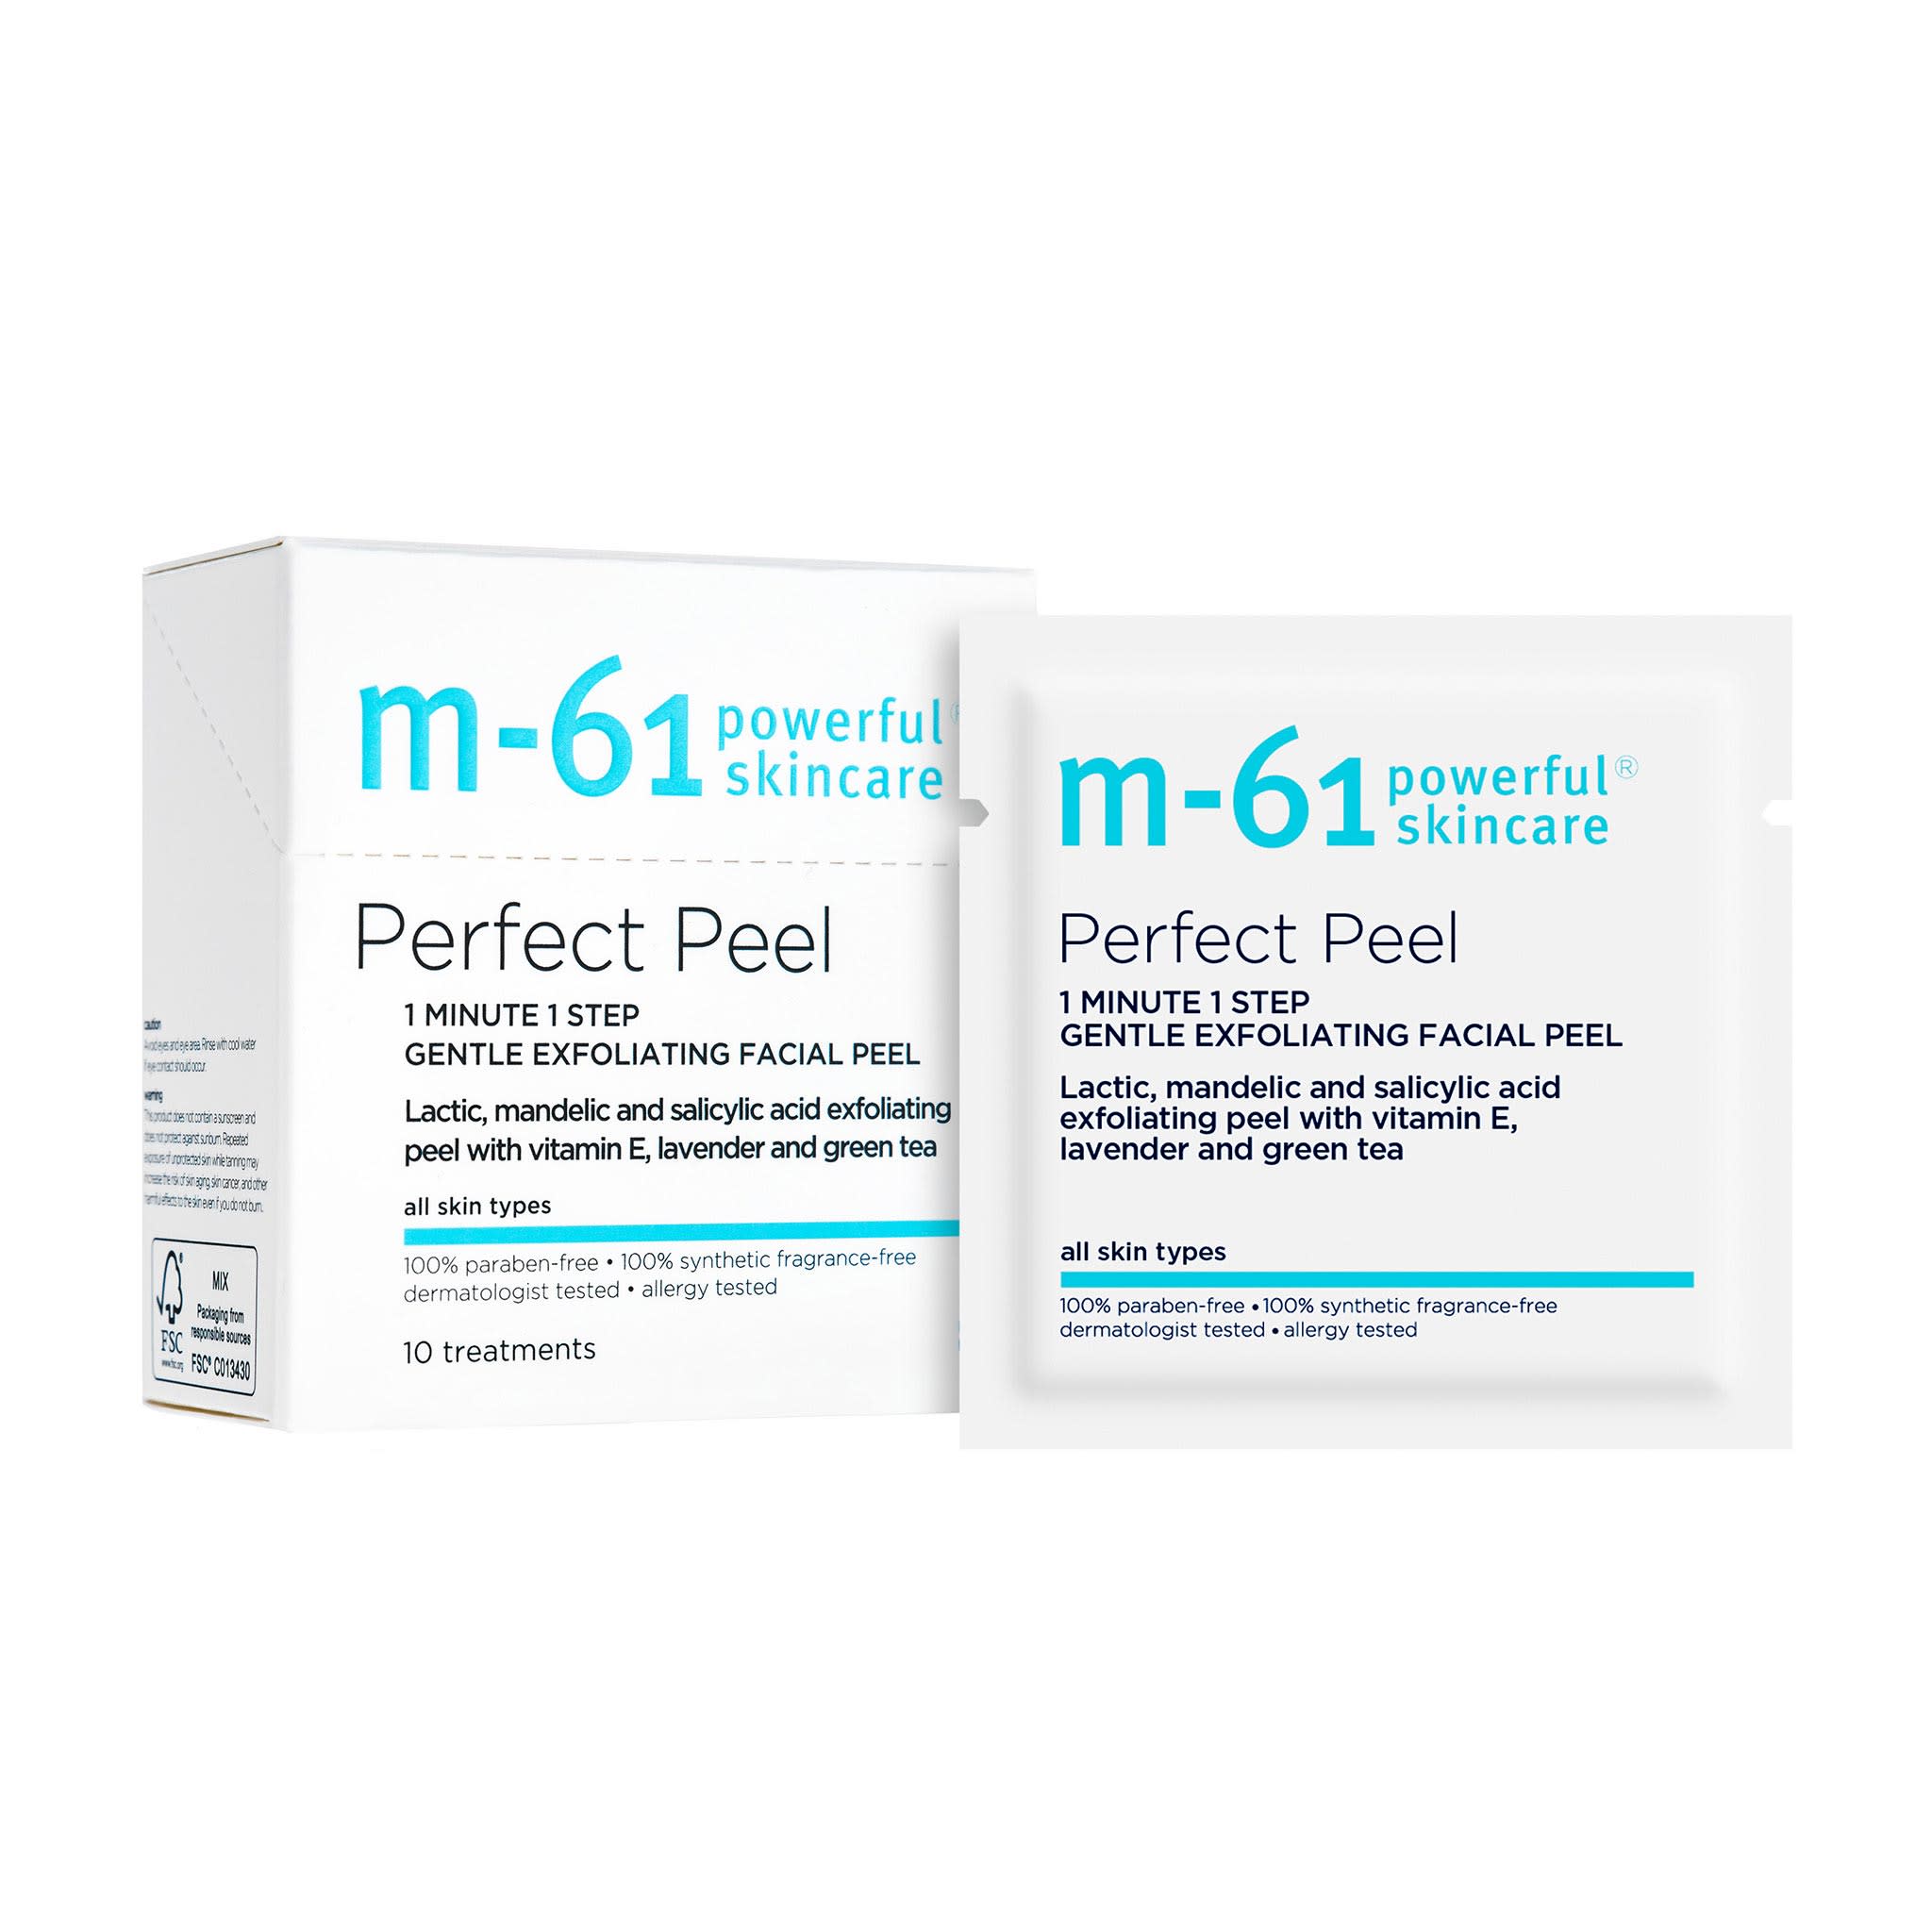 M-61 Perfect Peel Size variant: 10 Treatments main image.